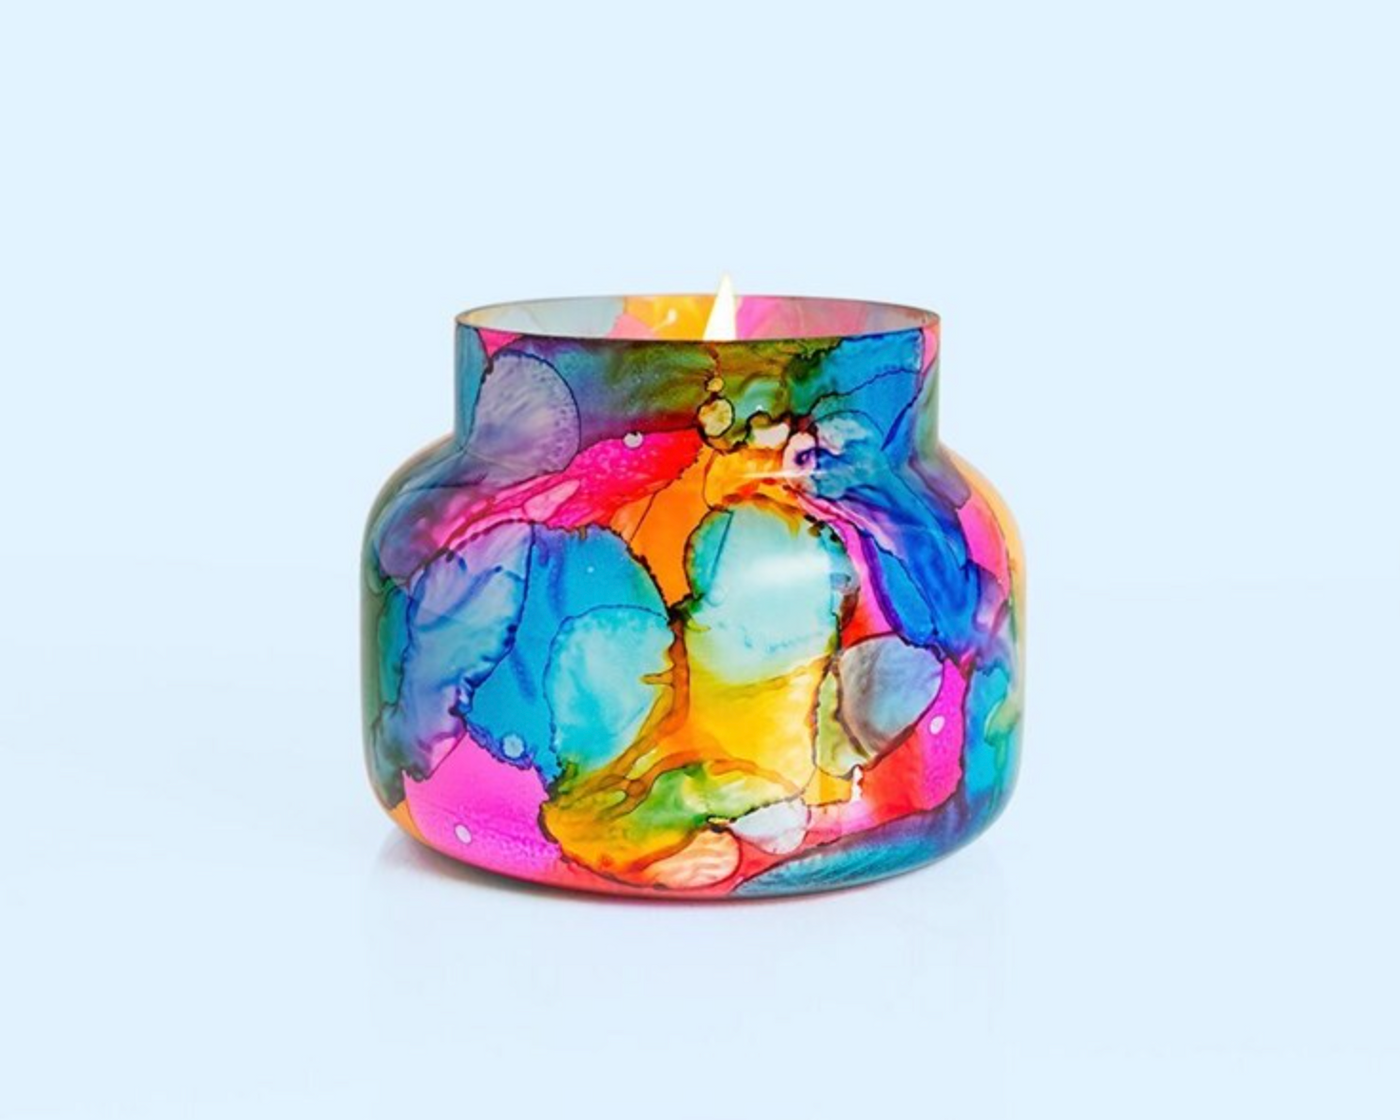 Volcano Signature Rainbow Watercolor Jar Candle